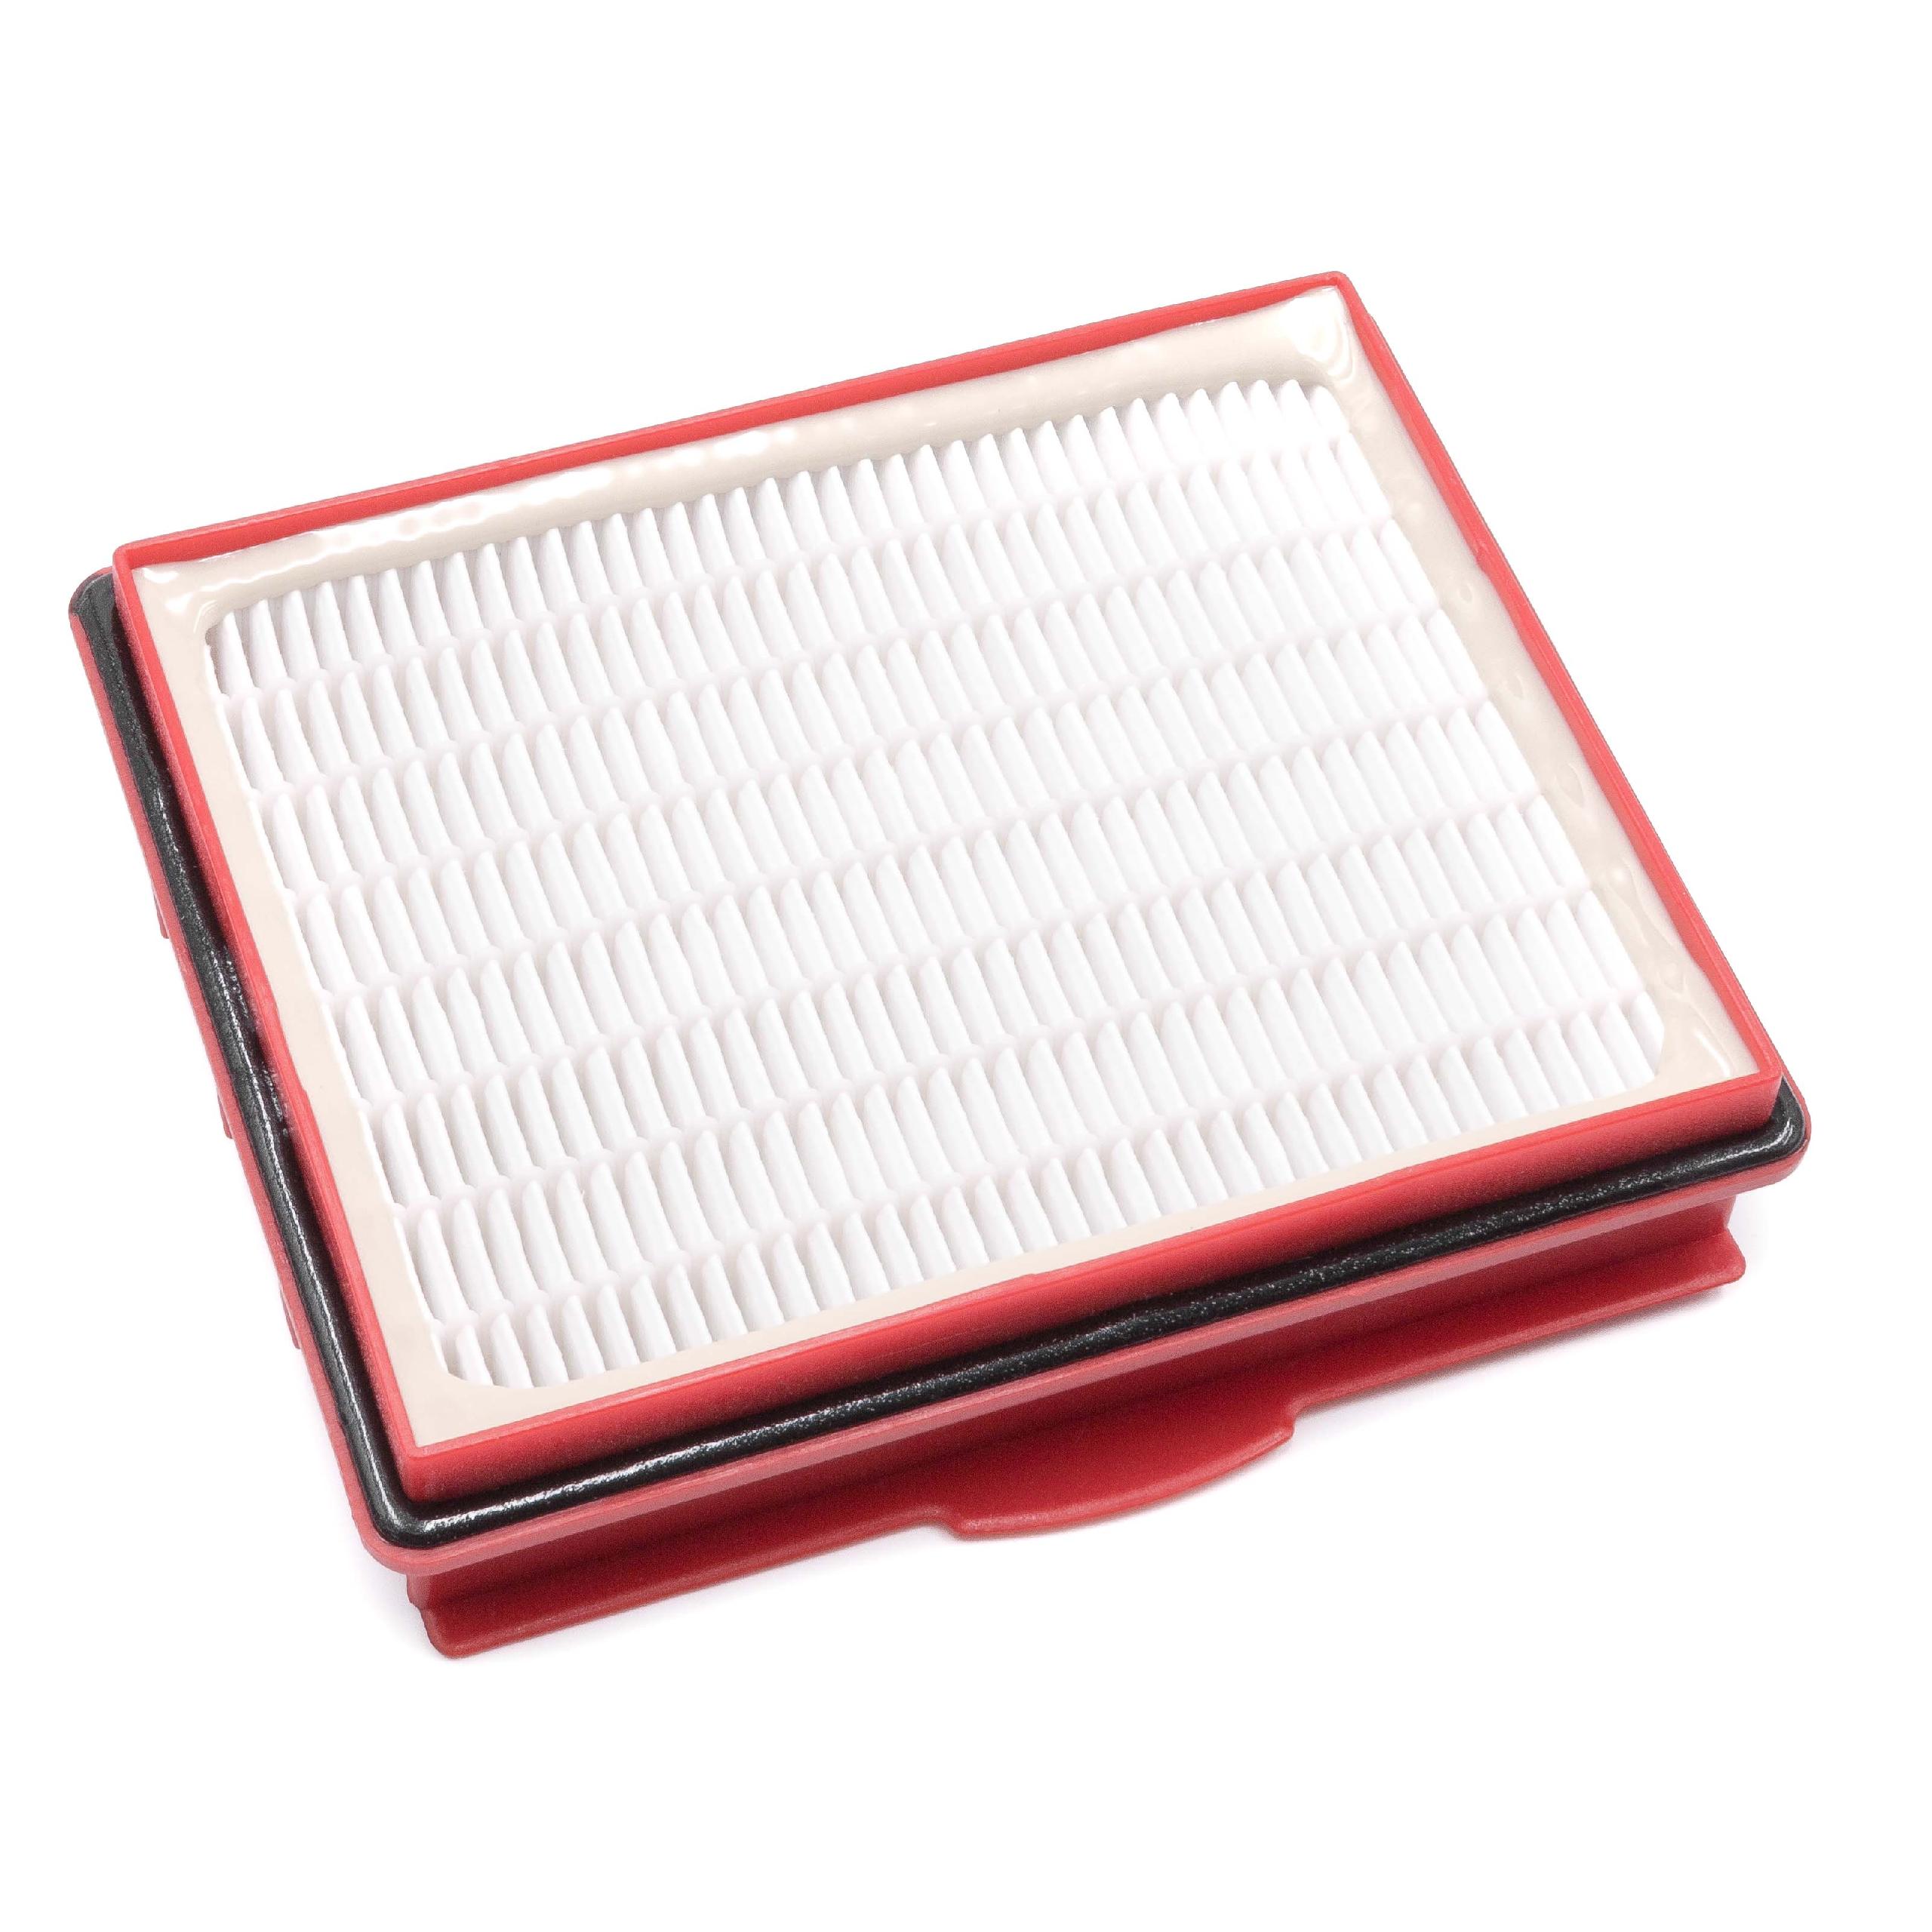 Filtro para aspiradora 1 Classic Lux, Electrolux 1 Classic - filtro Hepa blanco / rojo